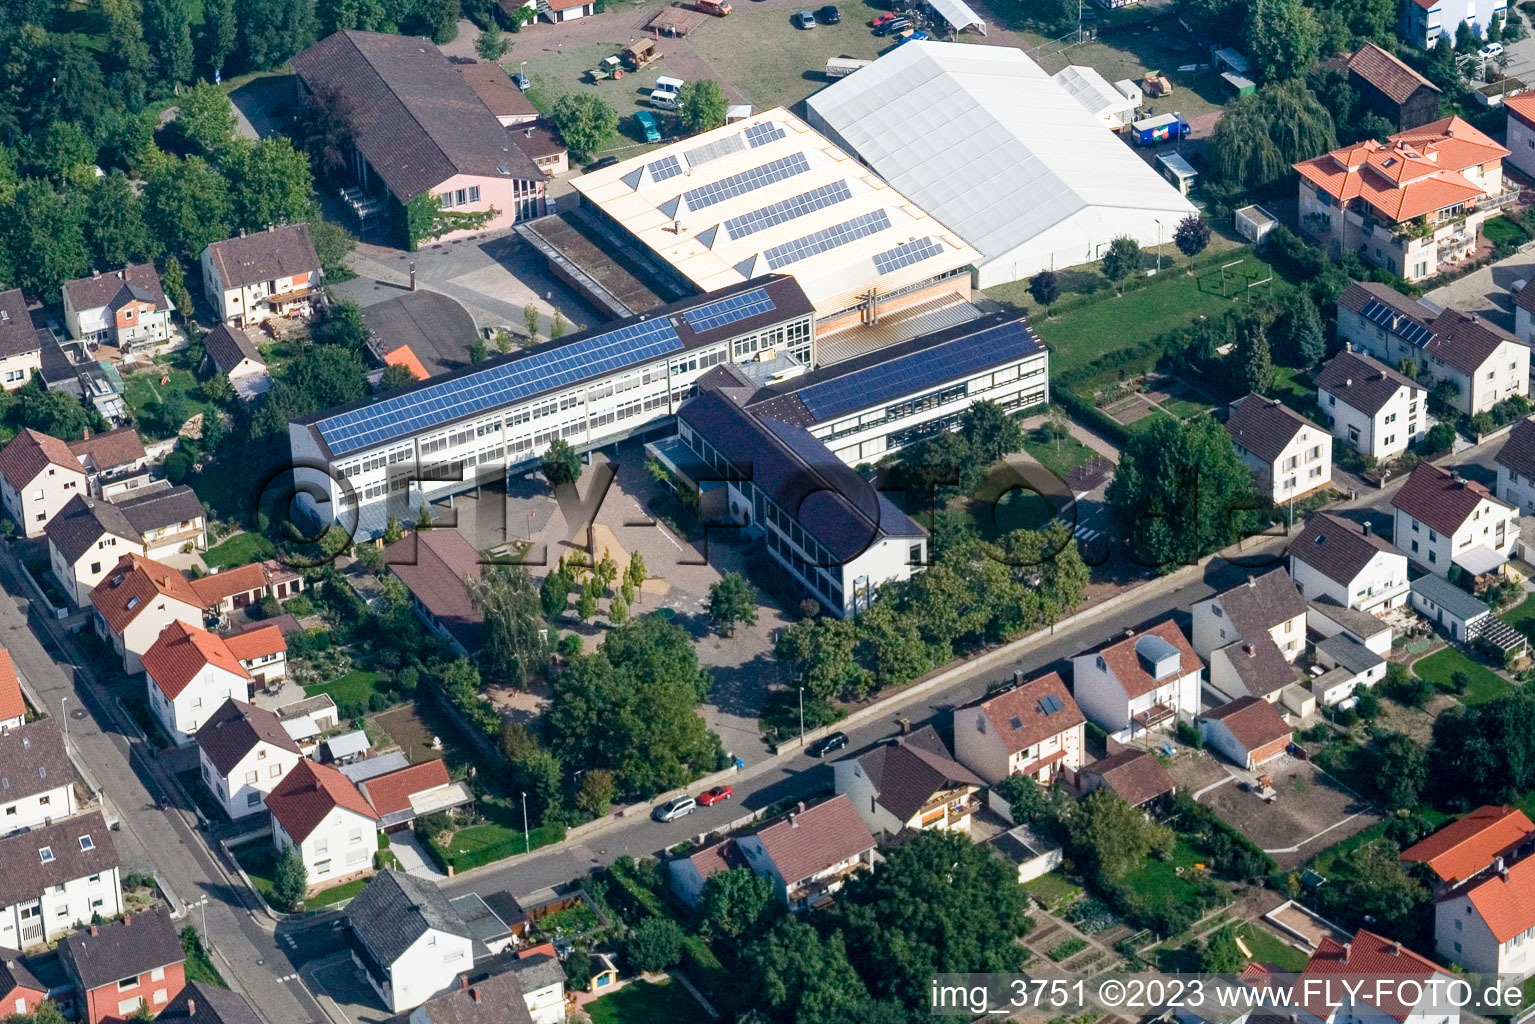 School in the district Herxheim in Herxheim bei Landau/Pfalz in the state Rhineland-Palatinate, Germany